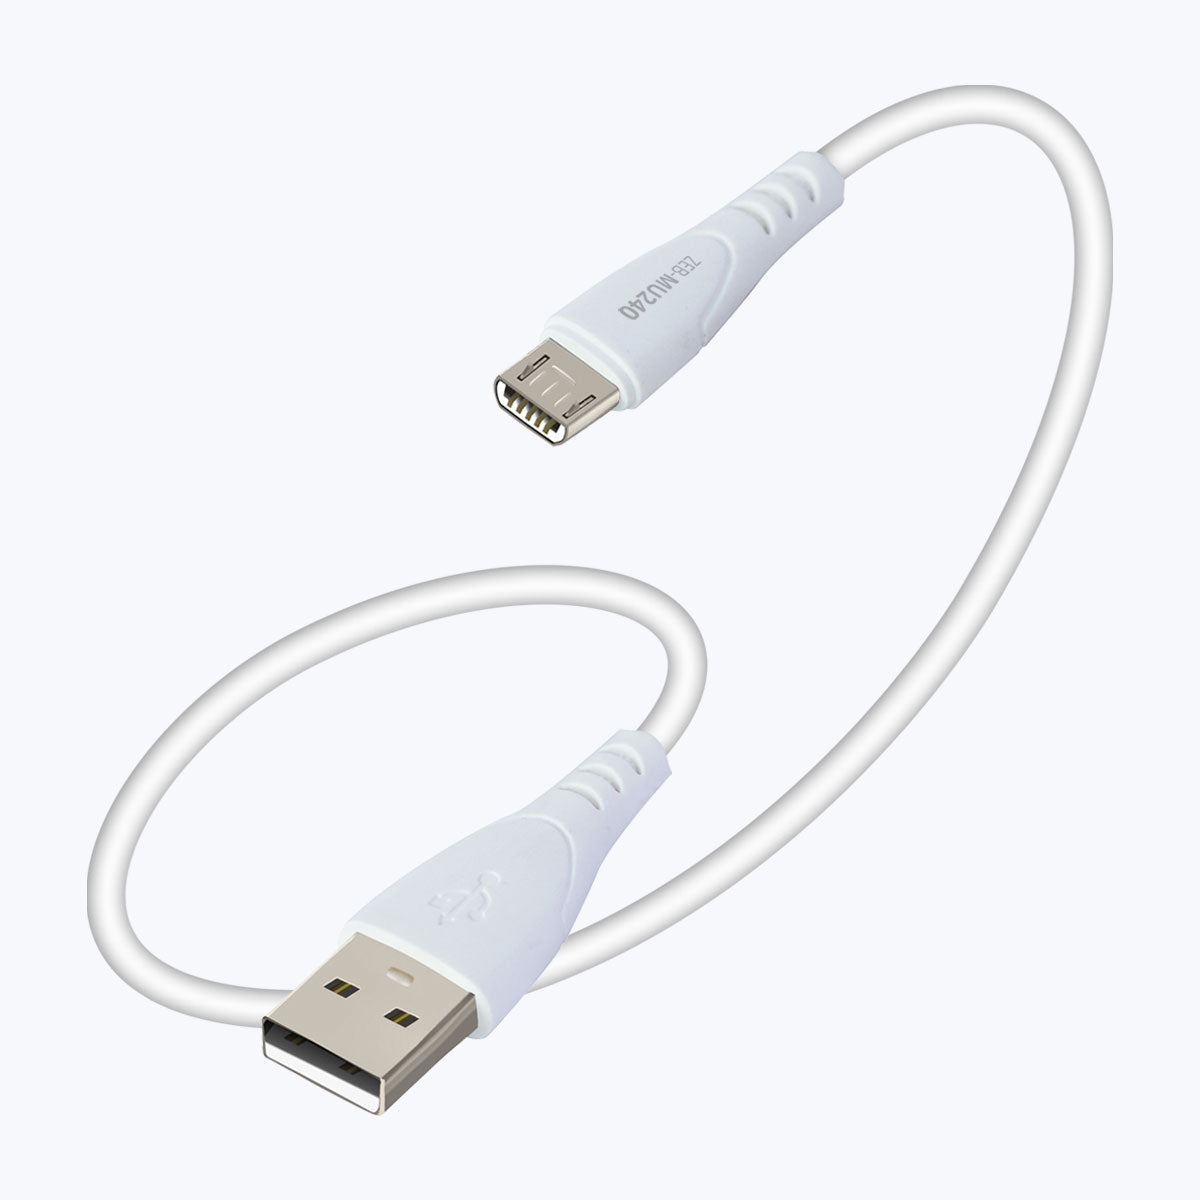 Zeb-MU240 - MIcro USB Cable - Zebronics